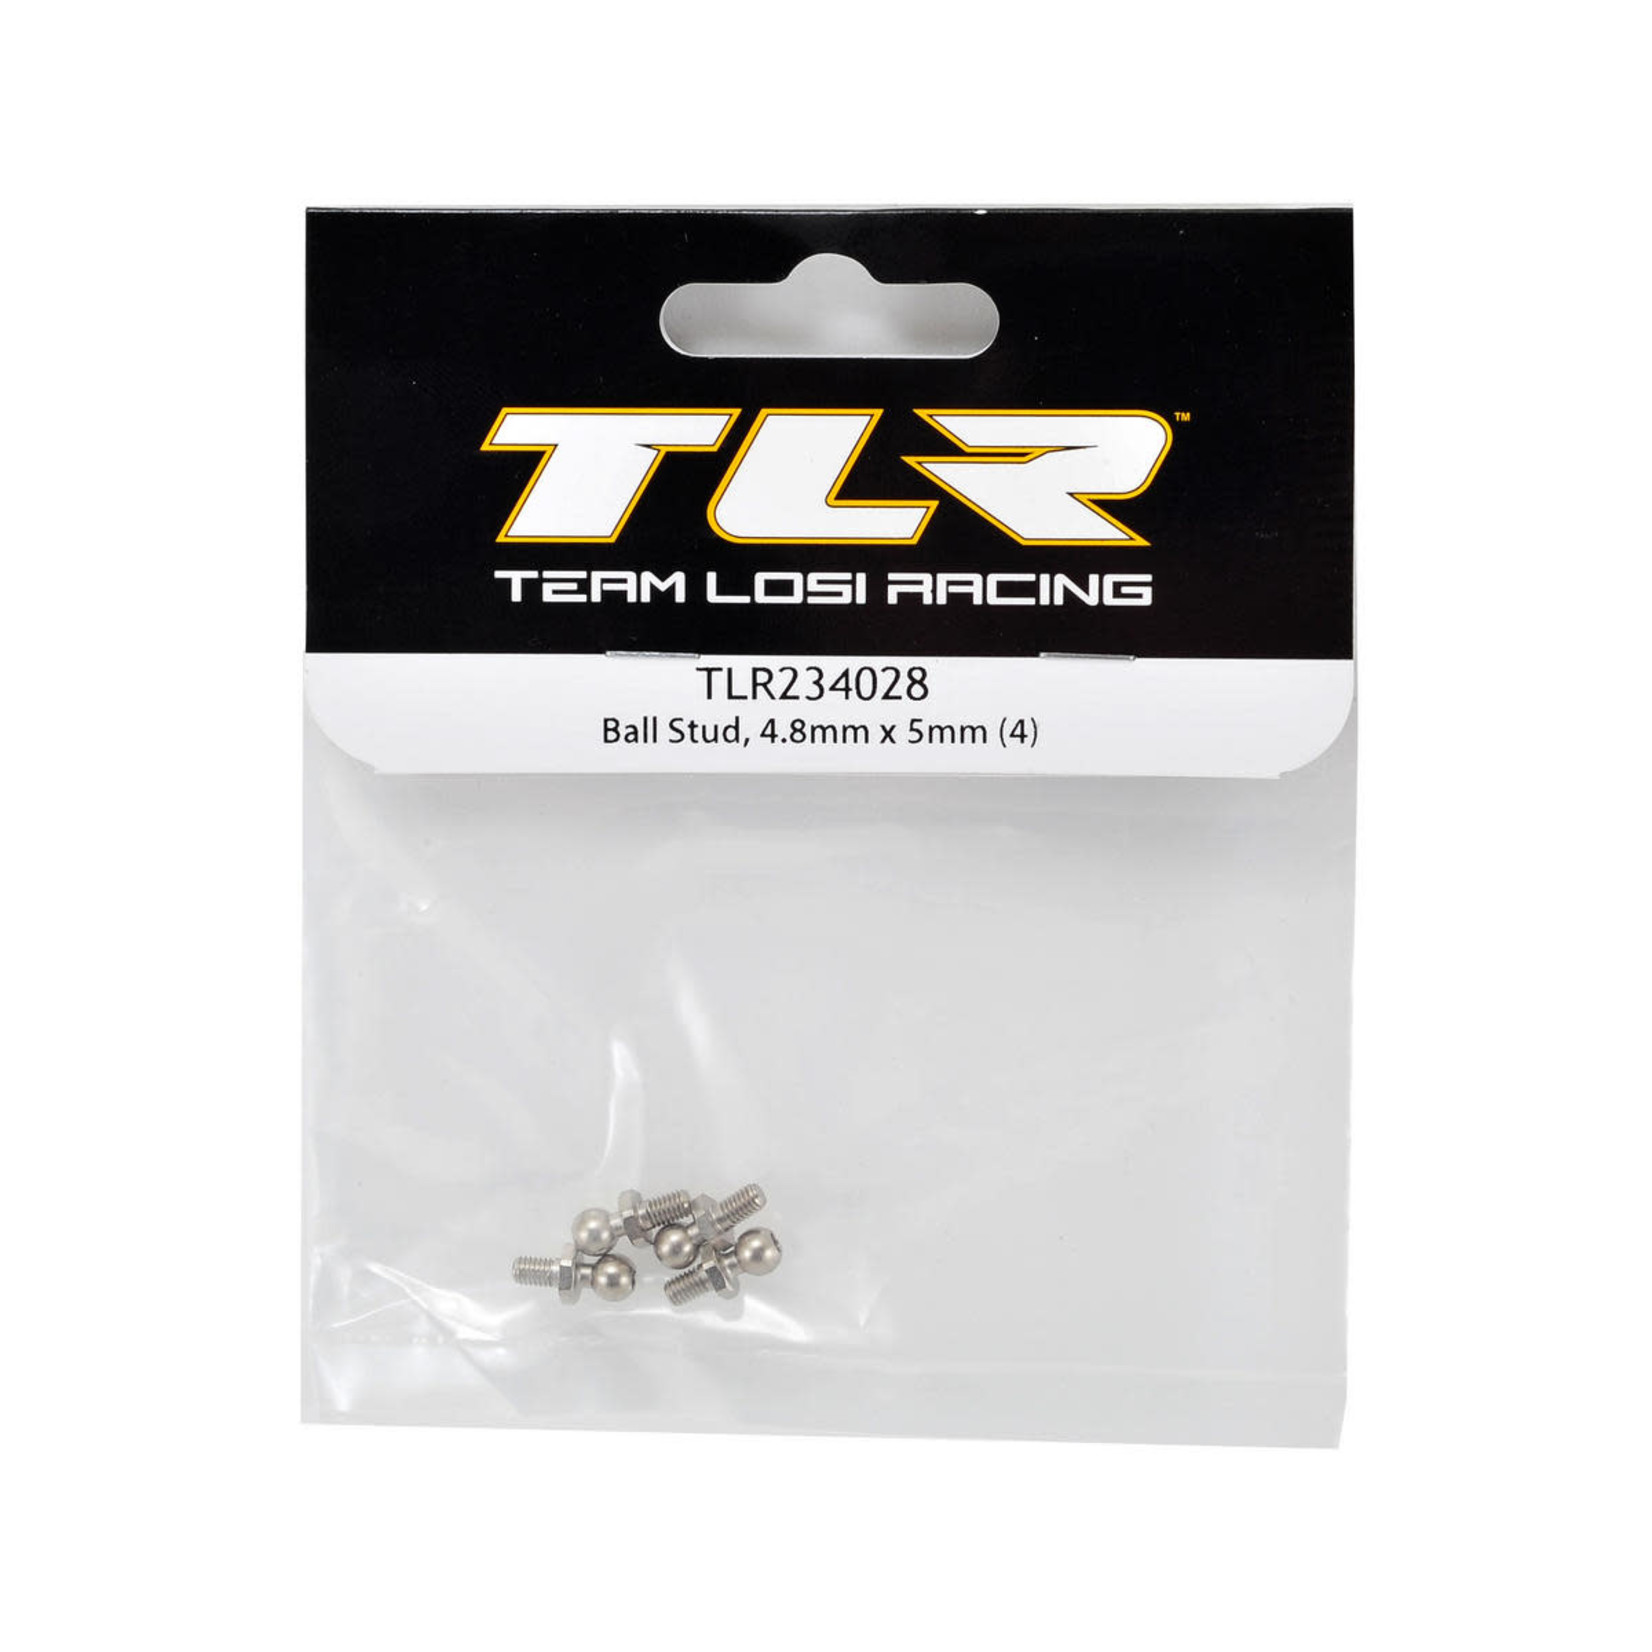 TLR Team Losi Racing 22-4 4.8x5mm Ball Stud (4) #TLR234028